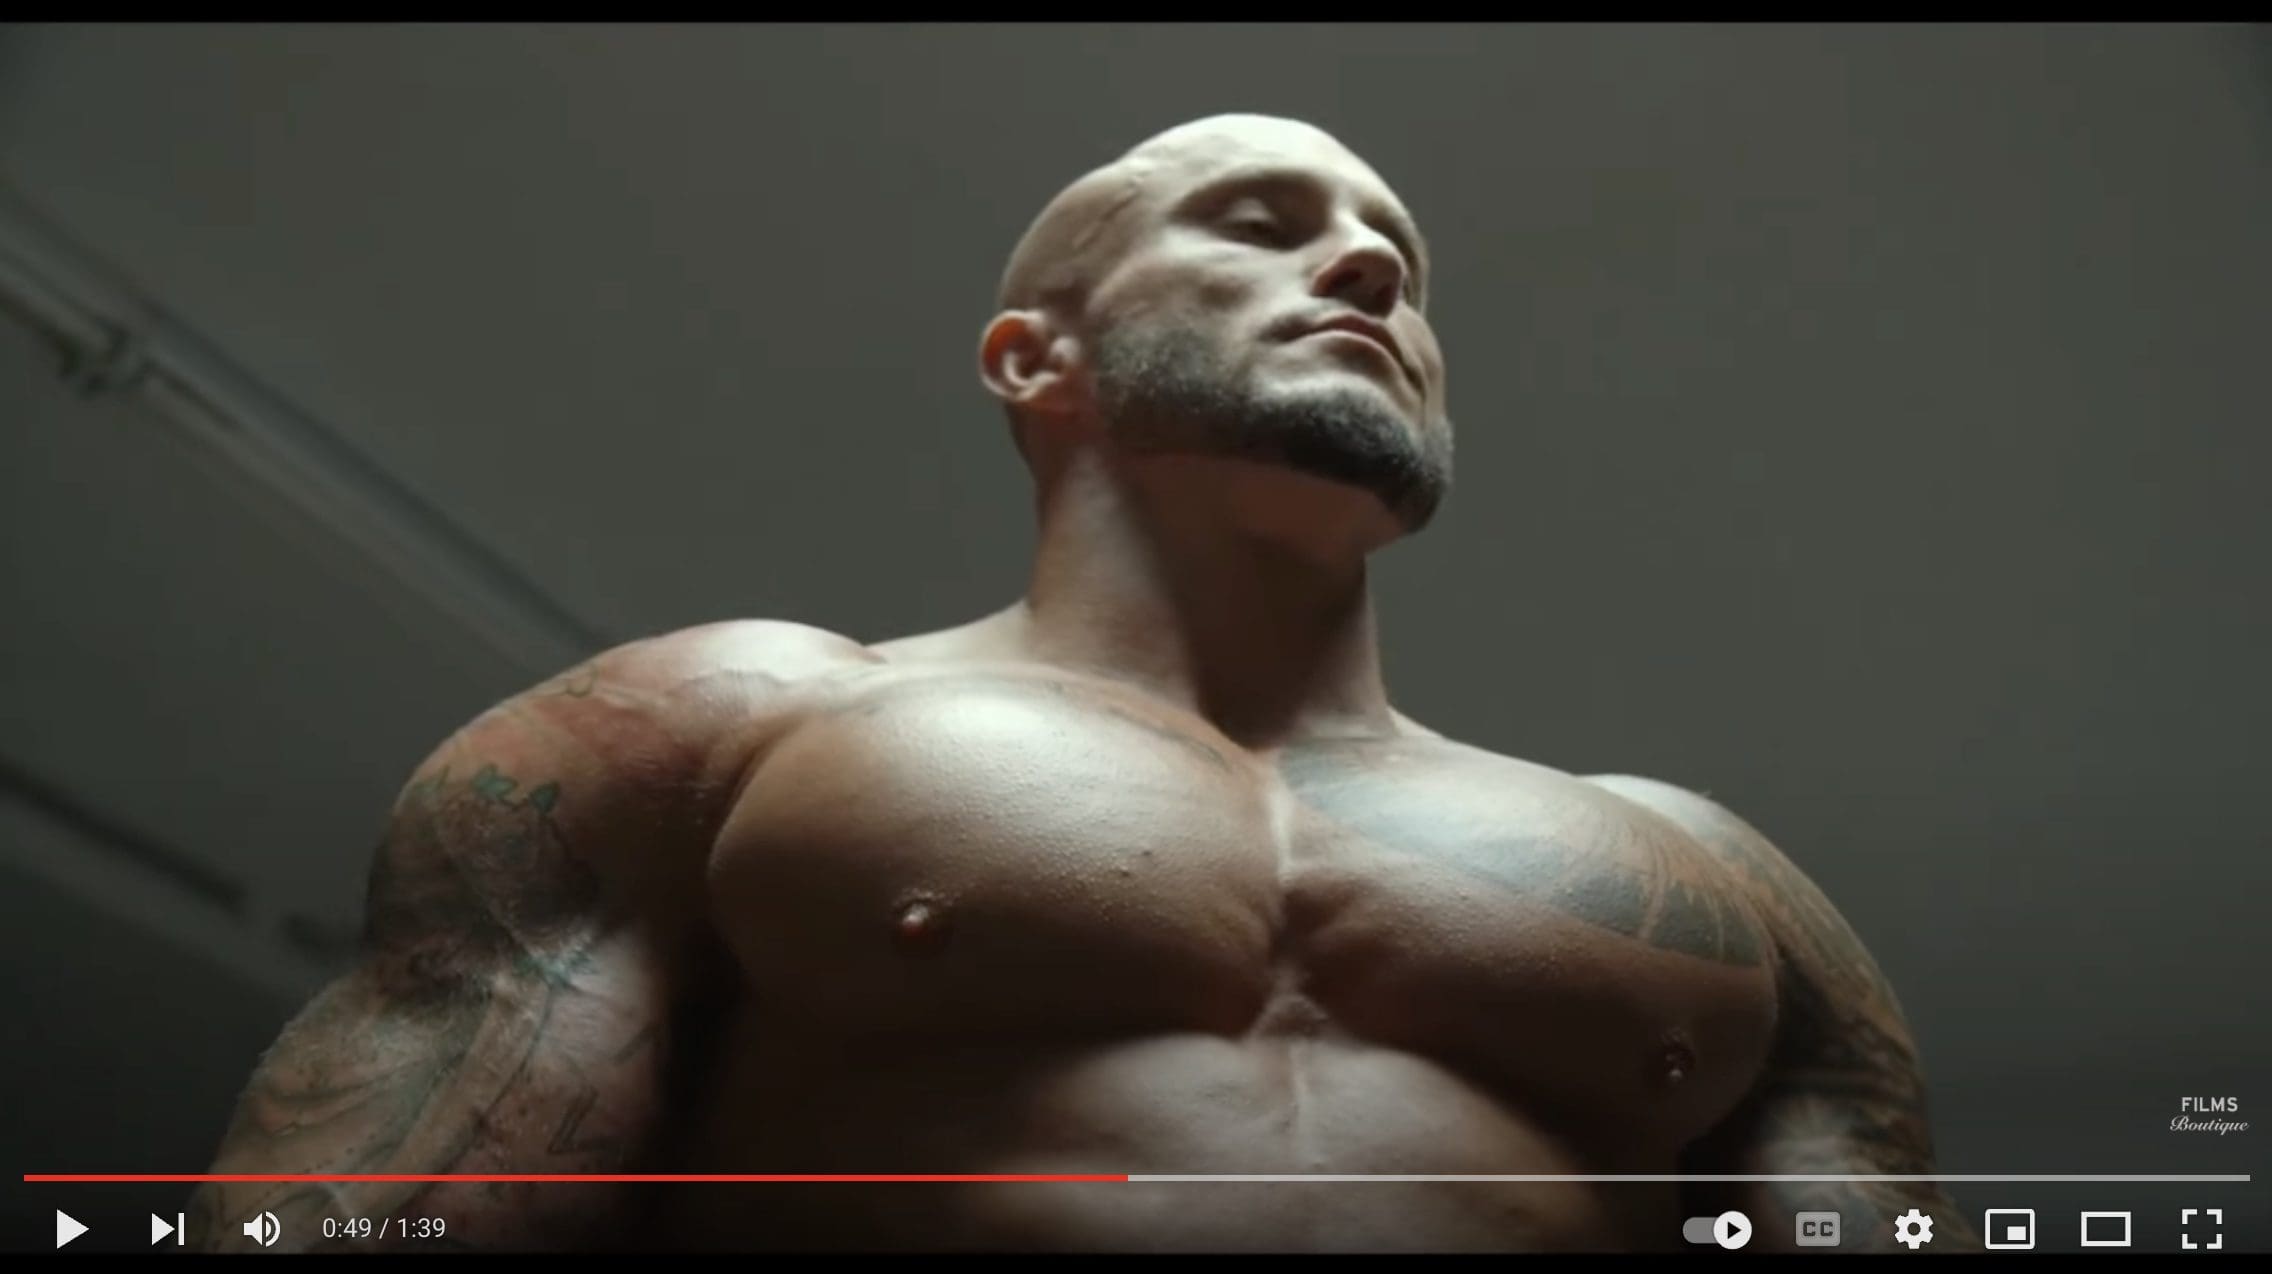 Giant Men in a Bodybuilding Documentary: A Skin So Soft